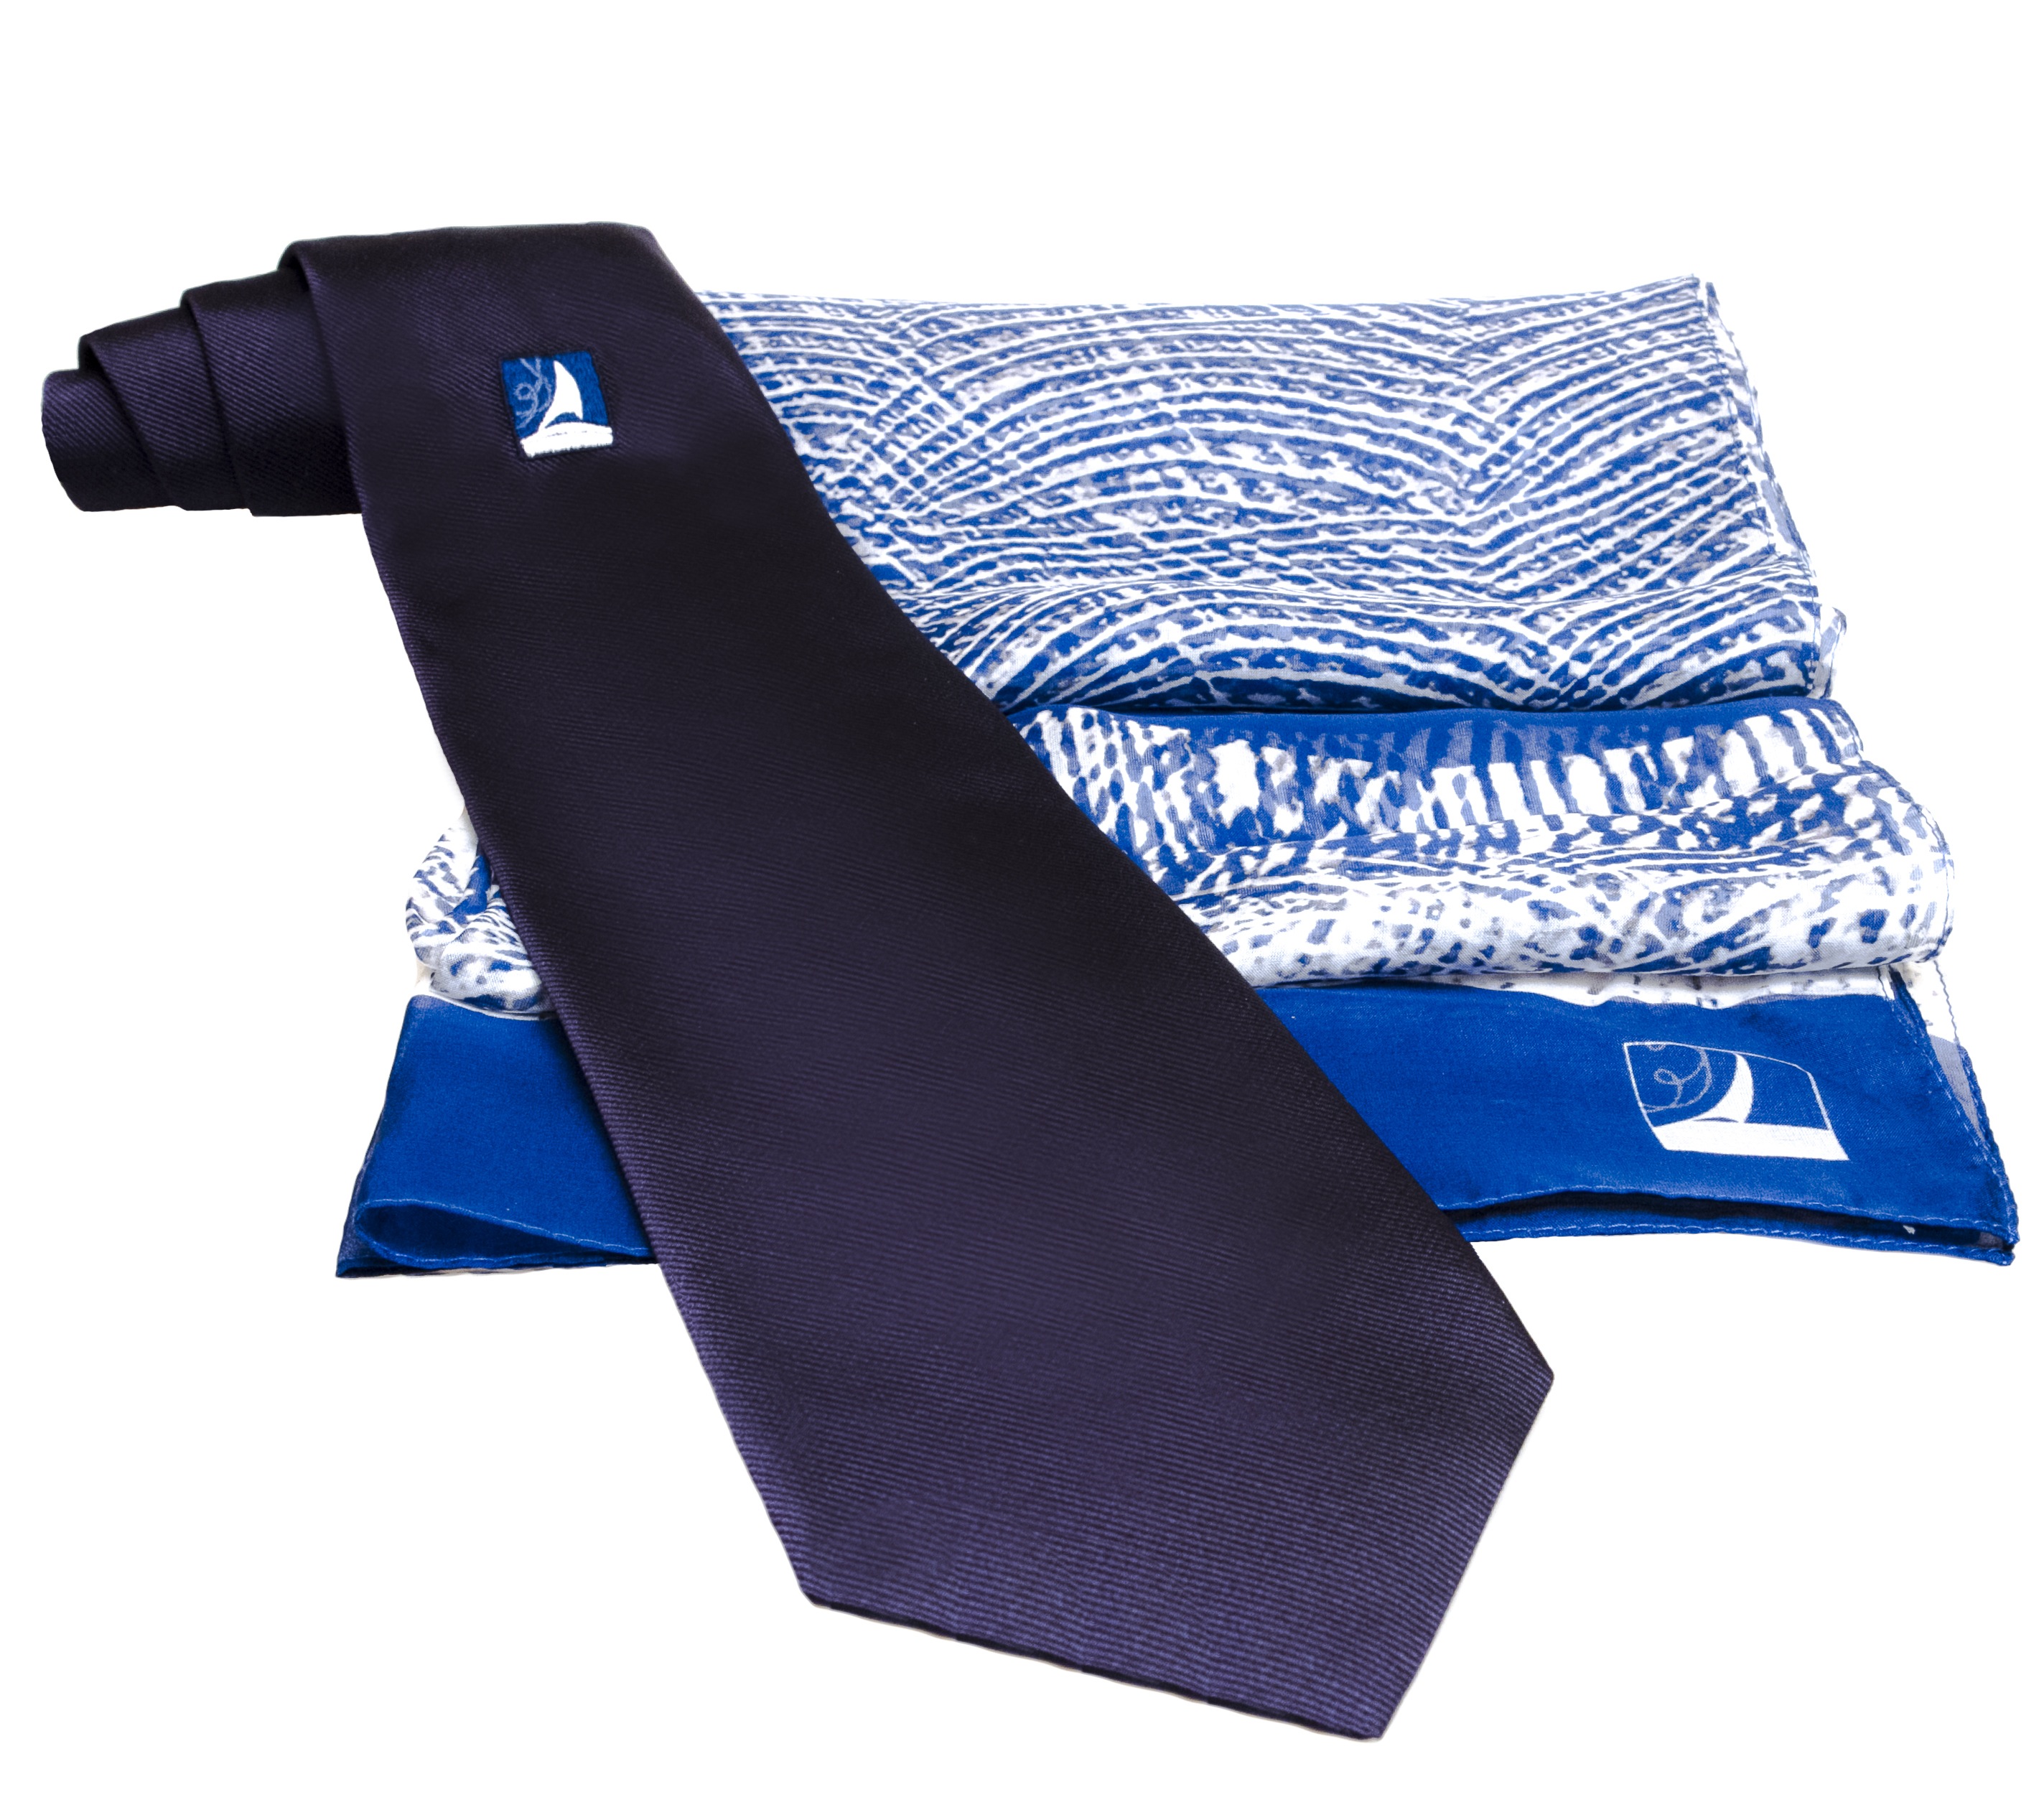 Foto accessori di rappresentanza: cravatta e foulard